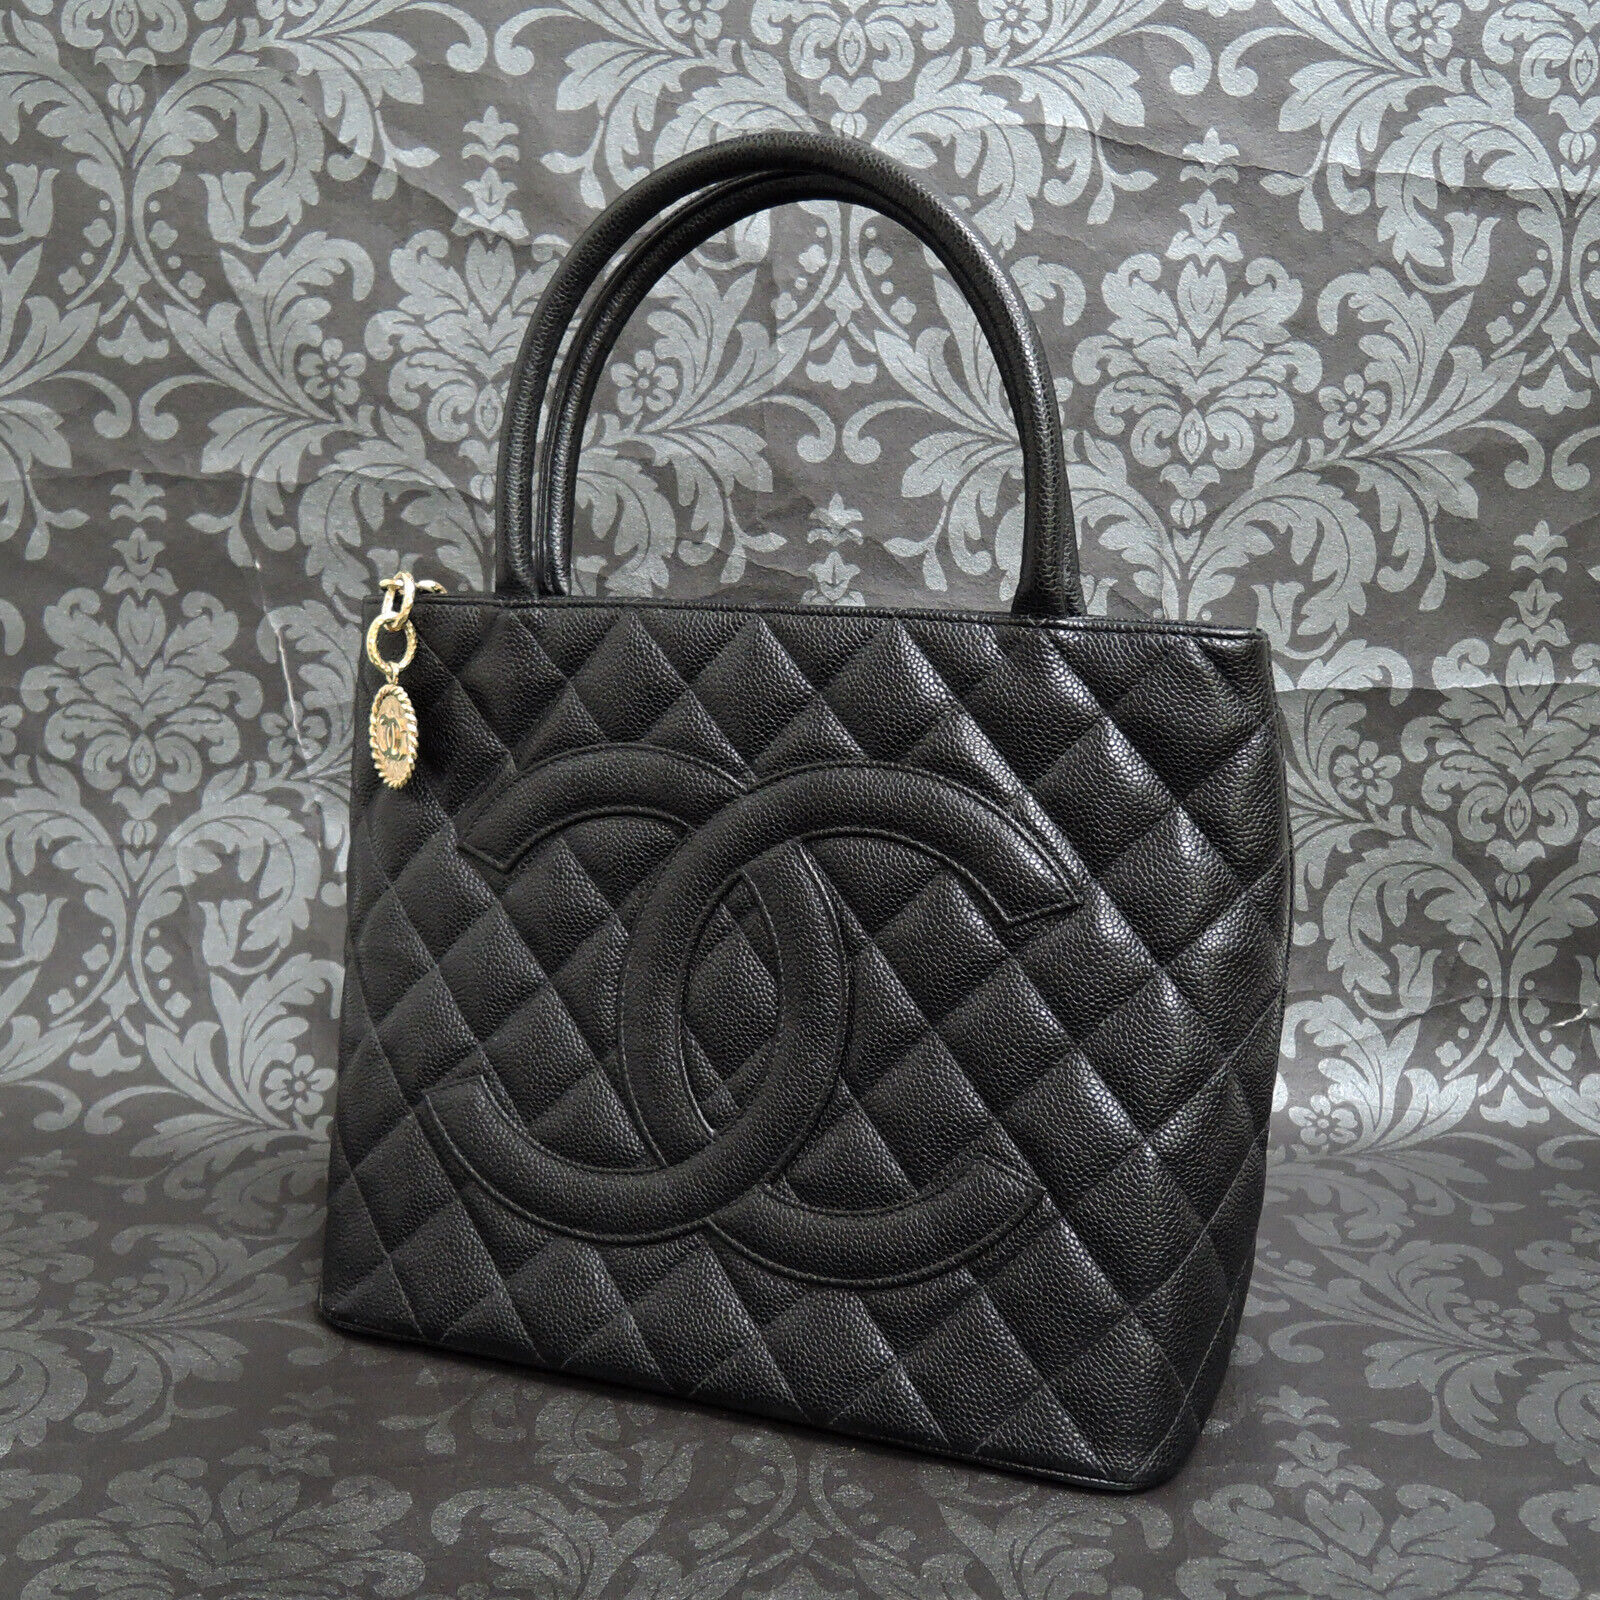 CHANEL MEDALLION Caviar Skin Leather Black Tote Bag | eBay